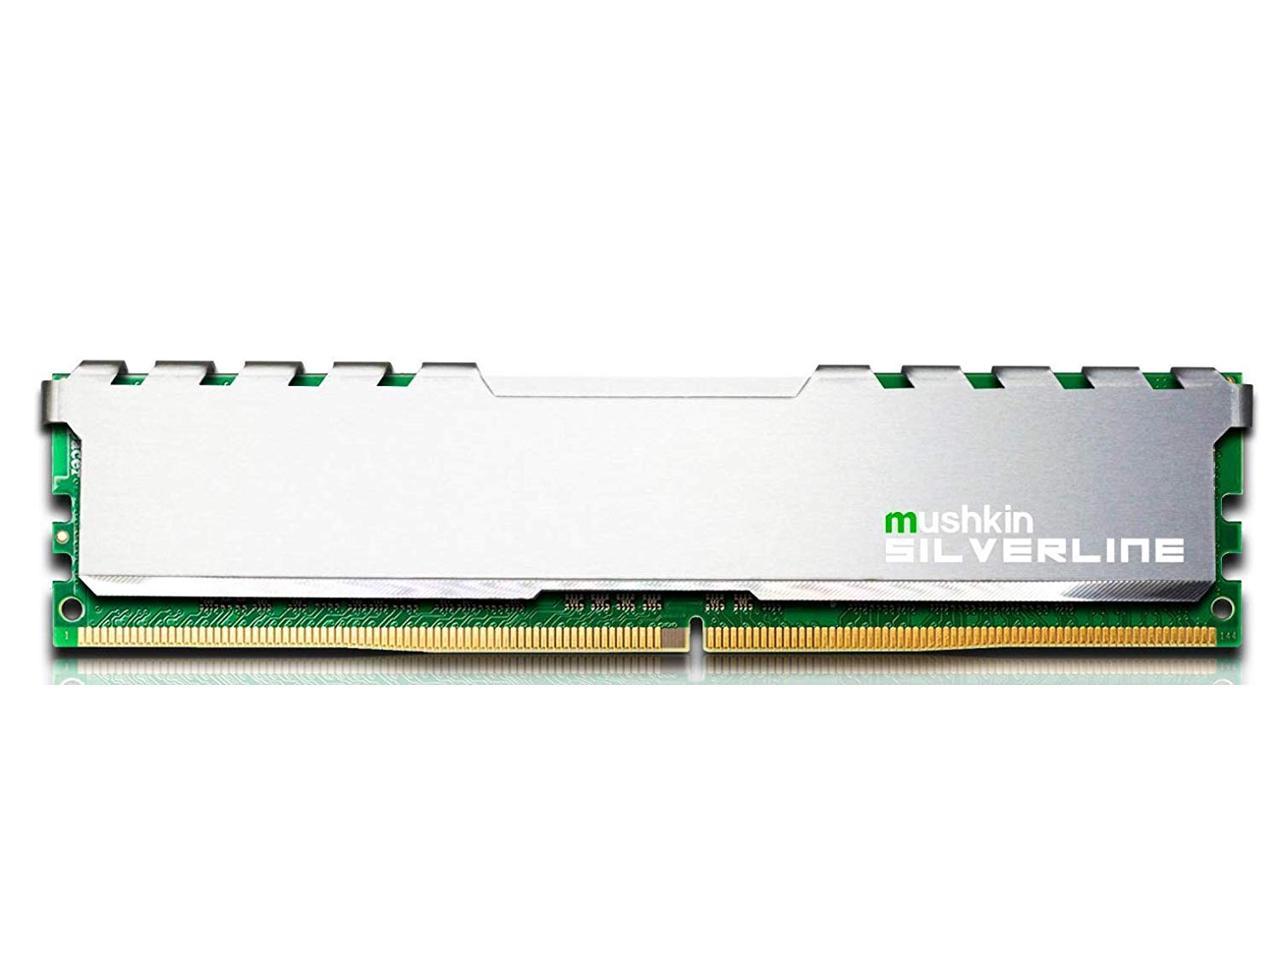 Mushkin 16GB (1X16) Silverline DDR4 UDIMM 2666MHz PC4-21300 Desktop Memory Model MSL4U266KF16G